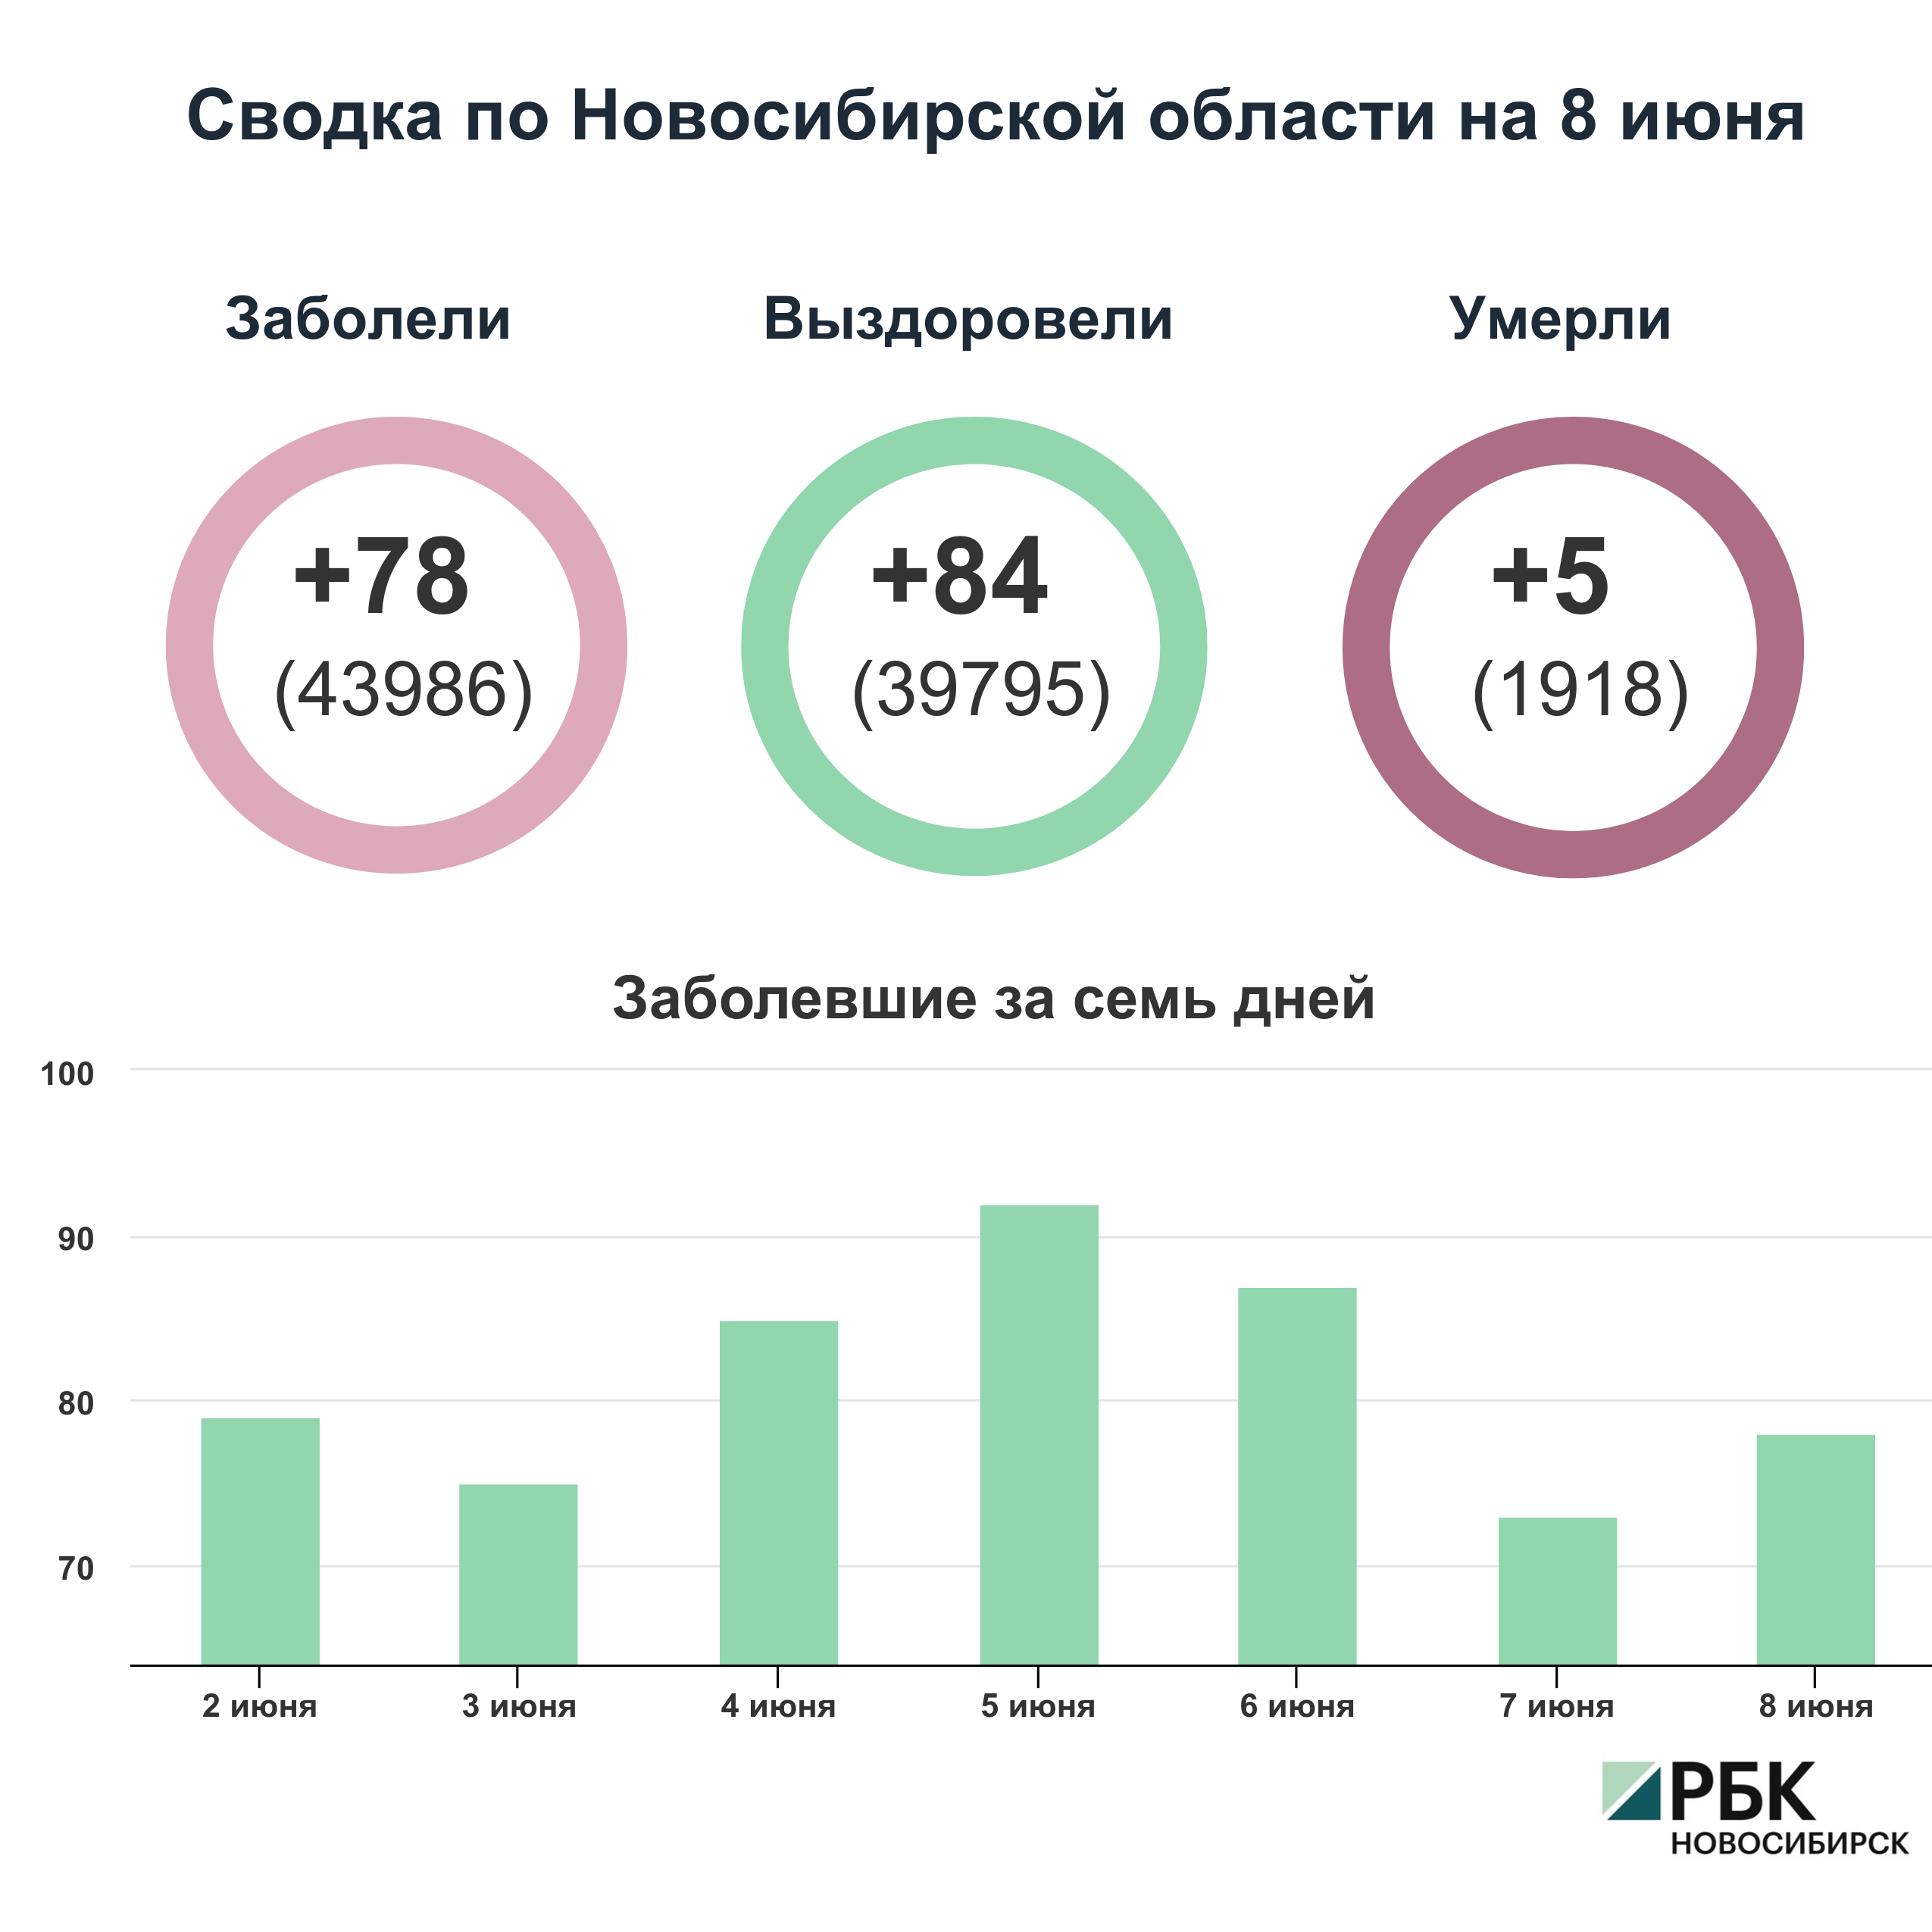 Коронавирус в Новосибирске: сводка на 8 июня